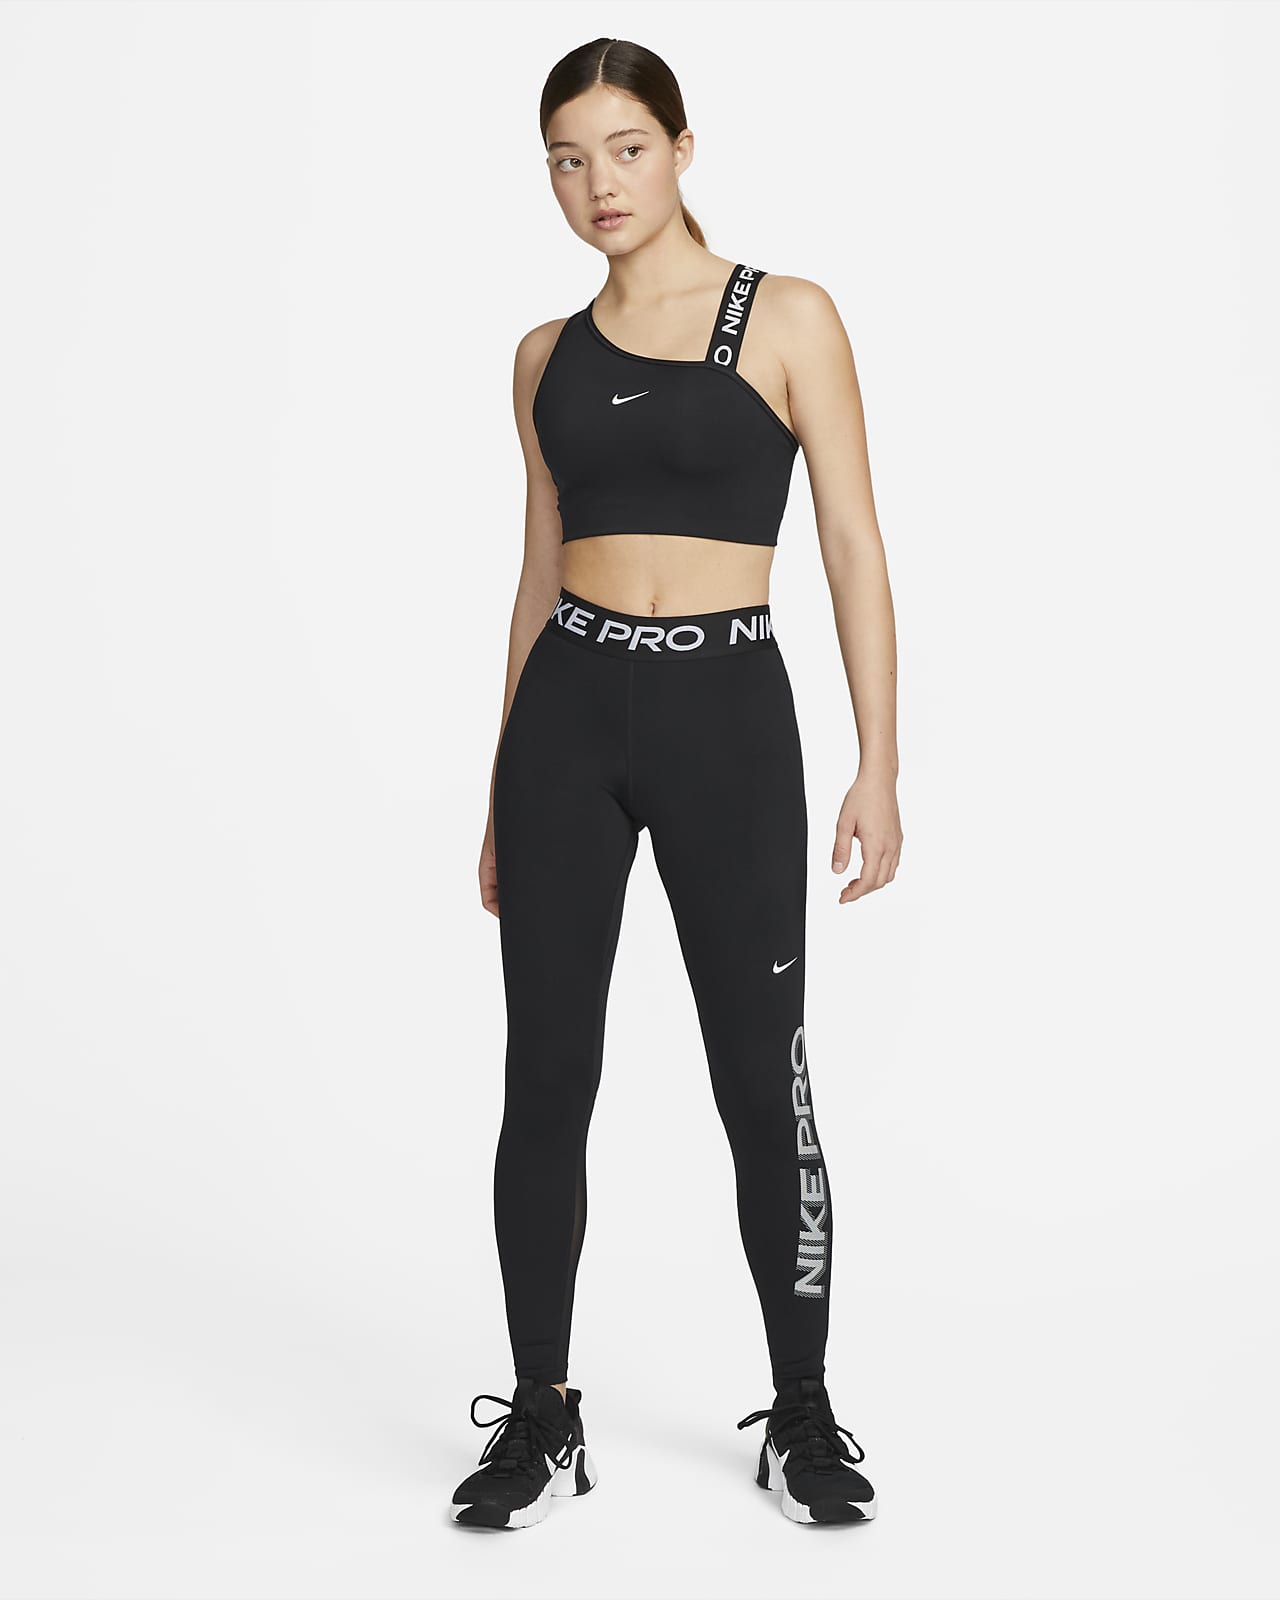 Verbinding verbroken Afhaalmaaltijd radar Nike Pro Women's Mid-Rise Mesh Training Leggings. Nike.com